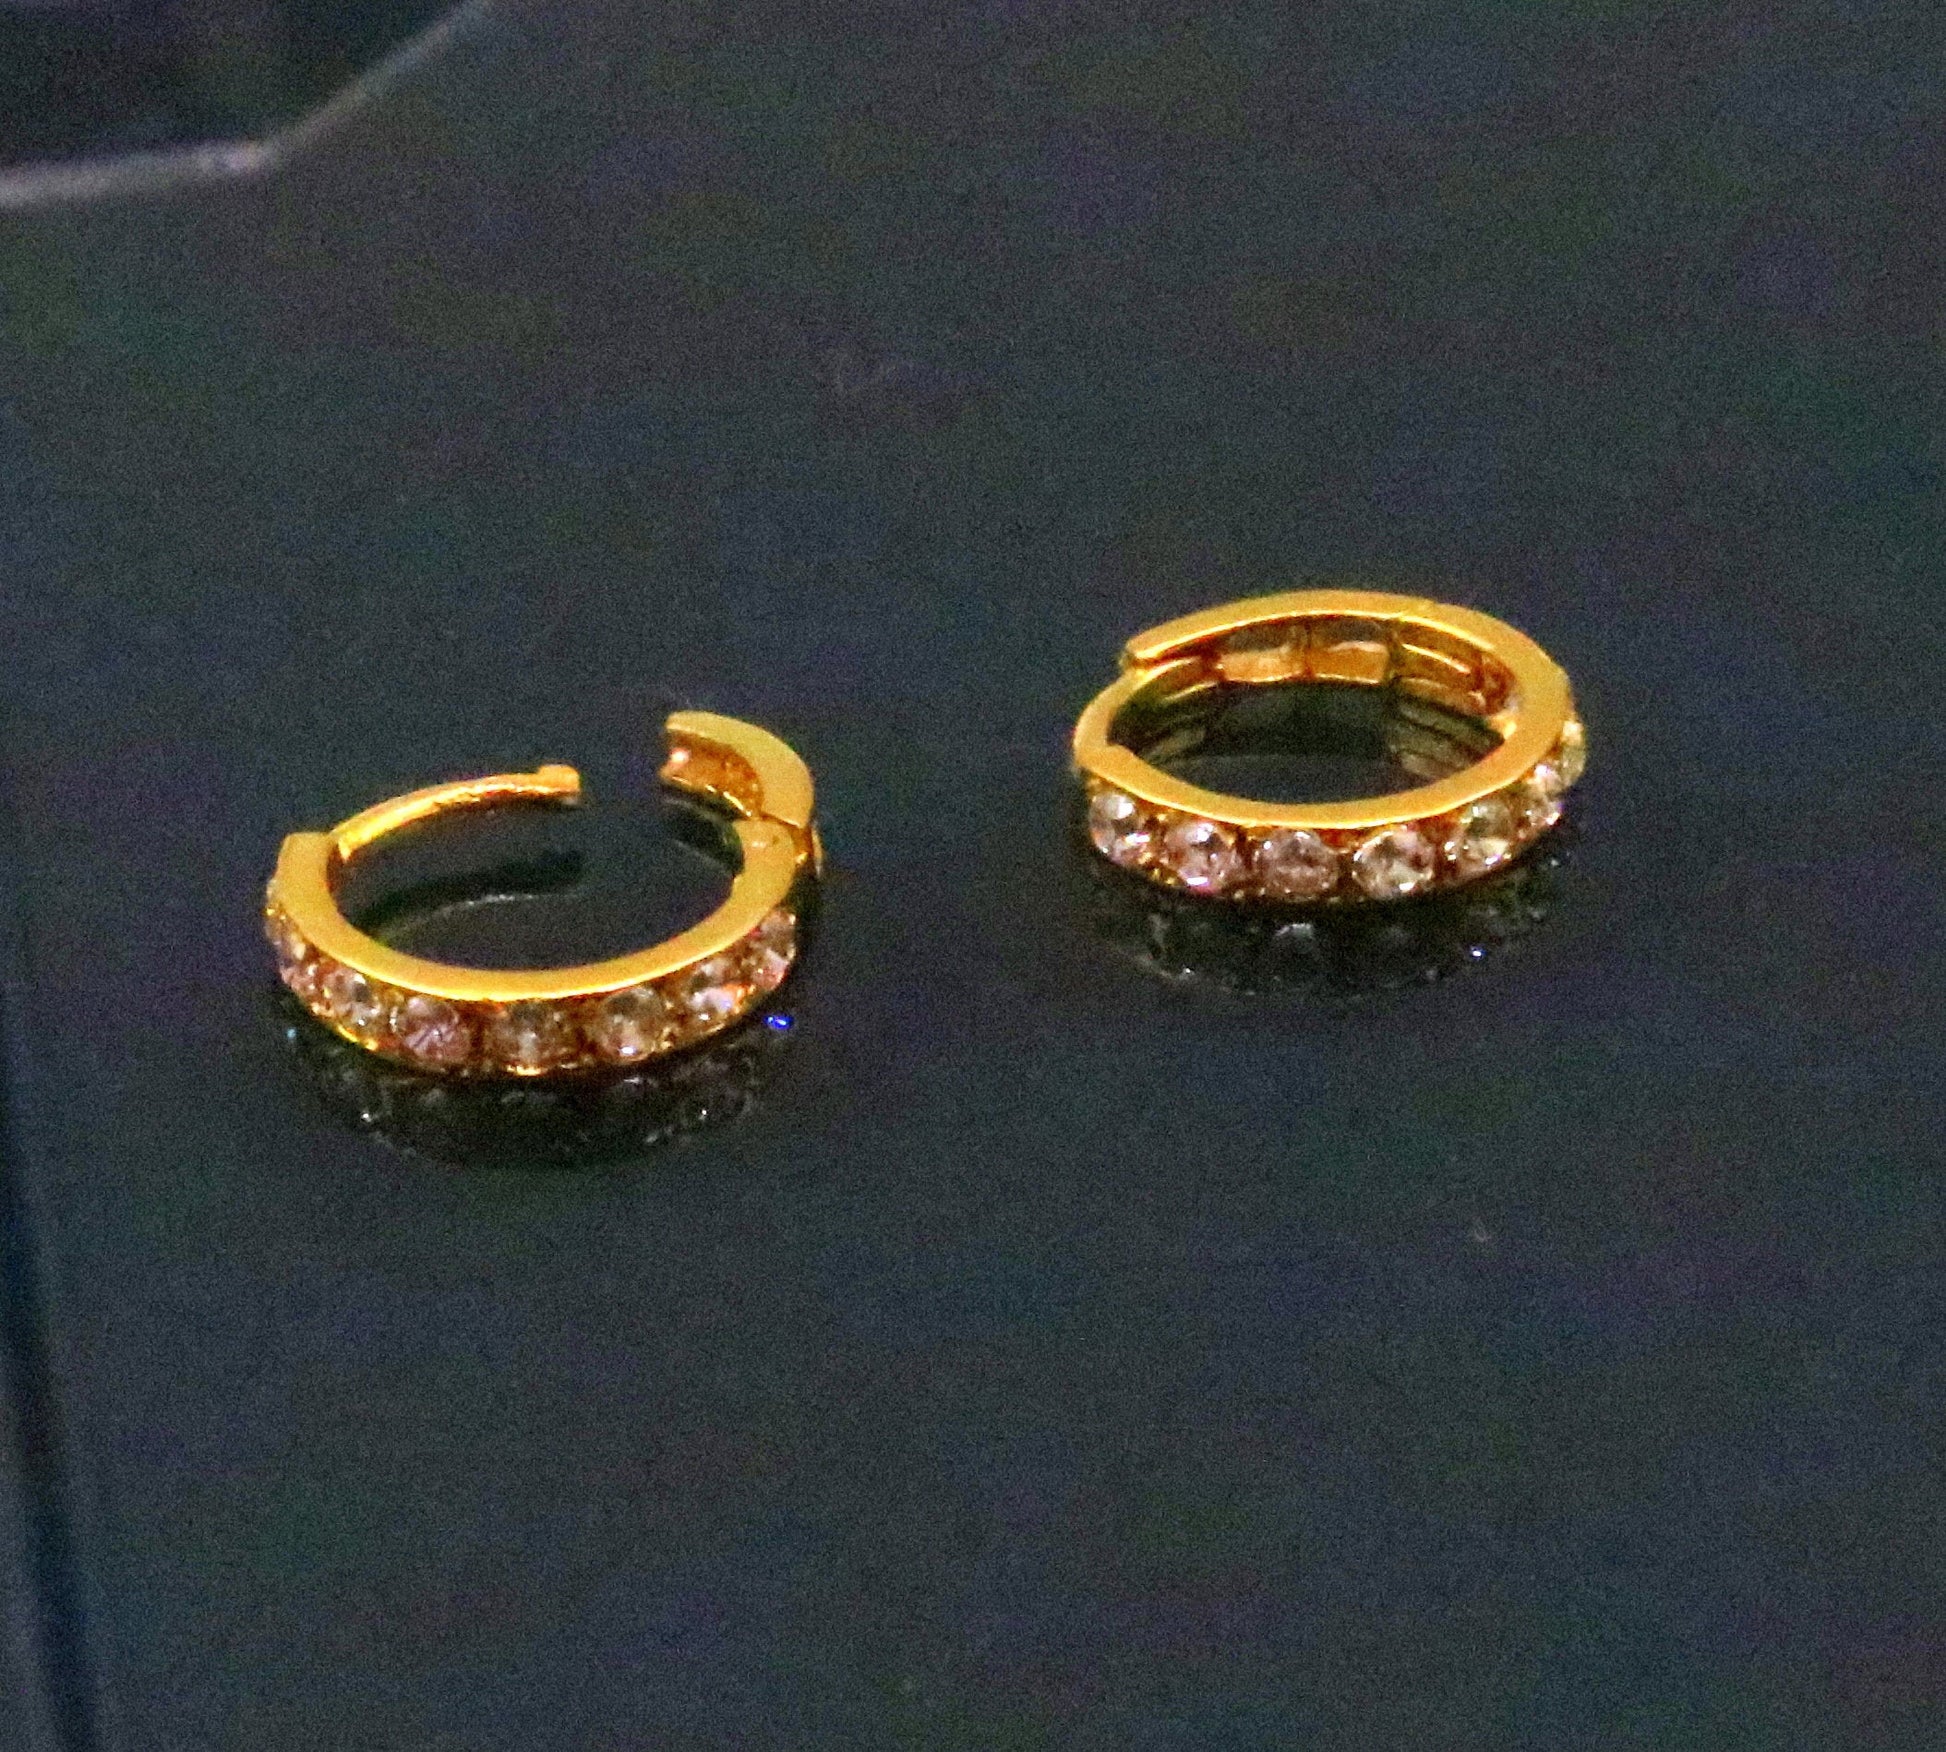 Amazing cz stone jadau 18kt solid gold handmade gorgeous earrings hoops jewelry belly dance tribal bali jewelry from India ho30 - TRIBAL ORNAMENTS